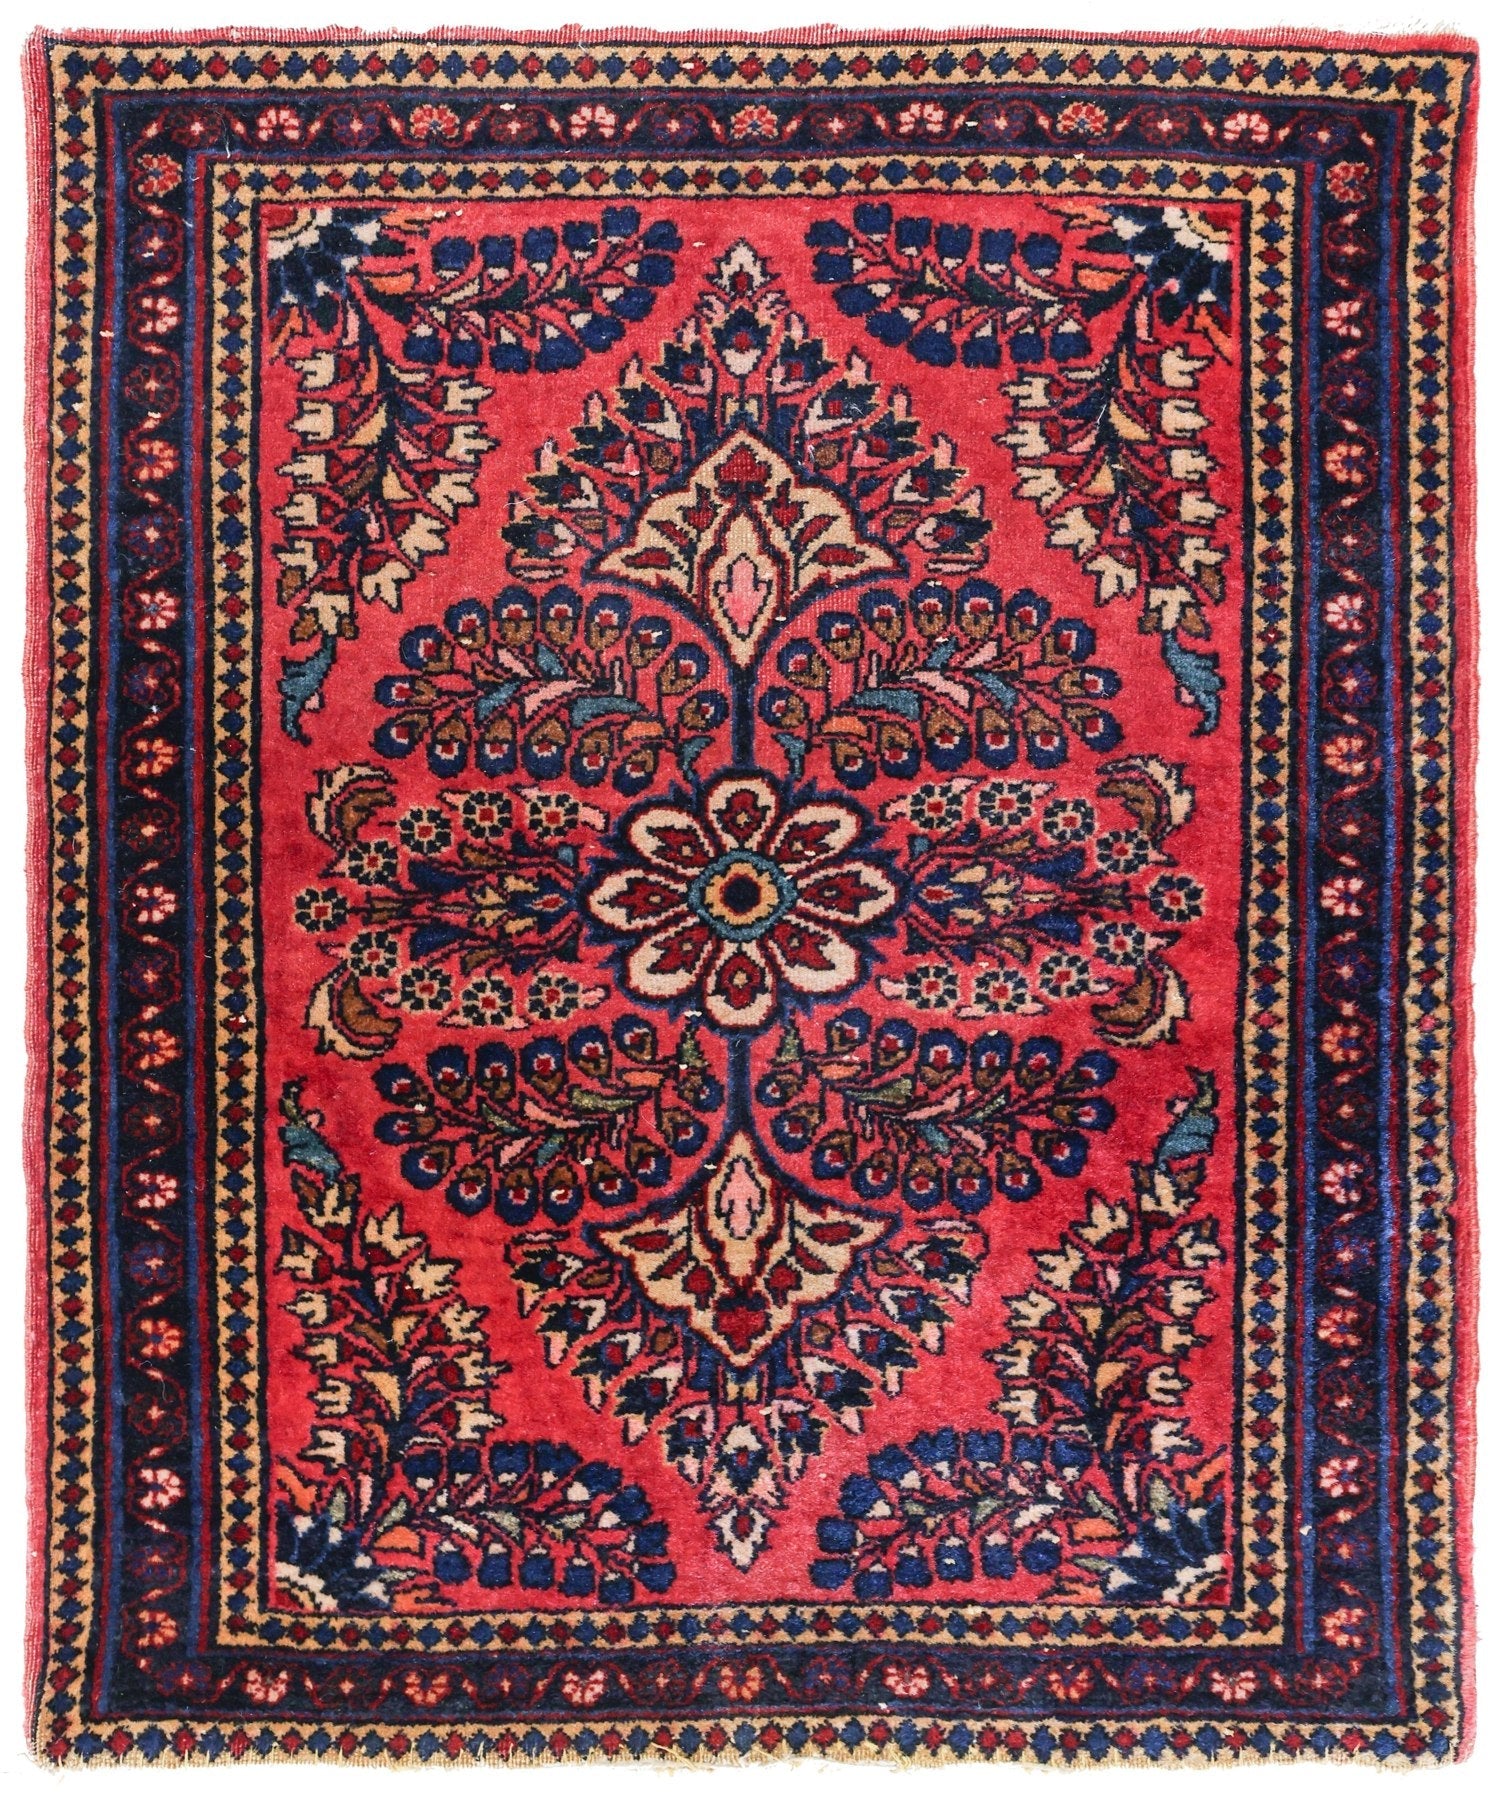 Antique Sarouk Handwoven Traditional Rug